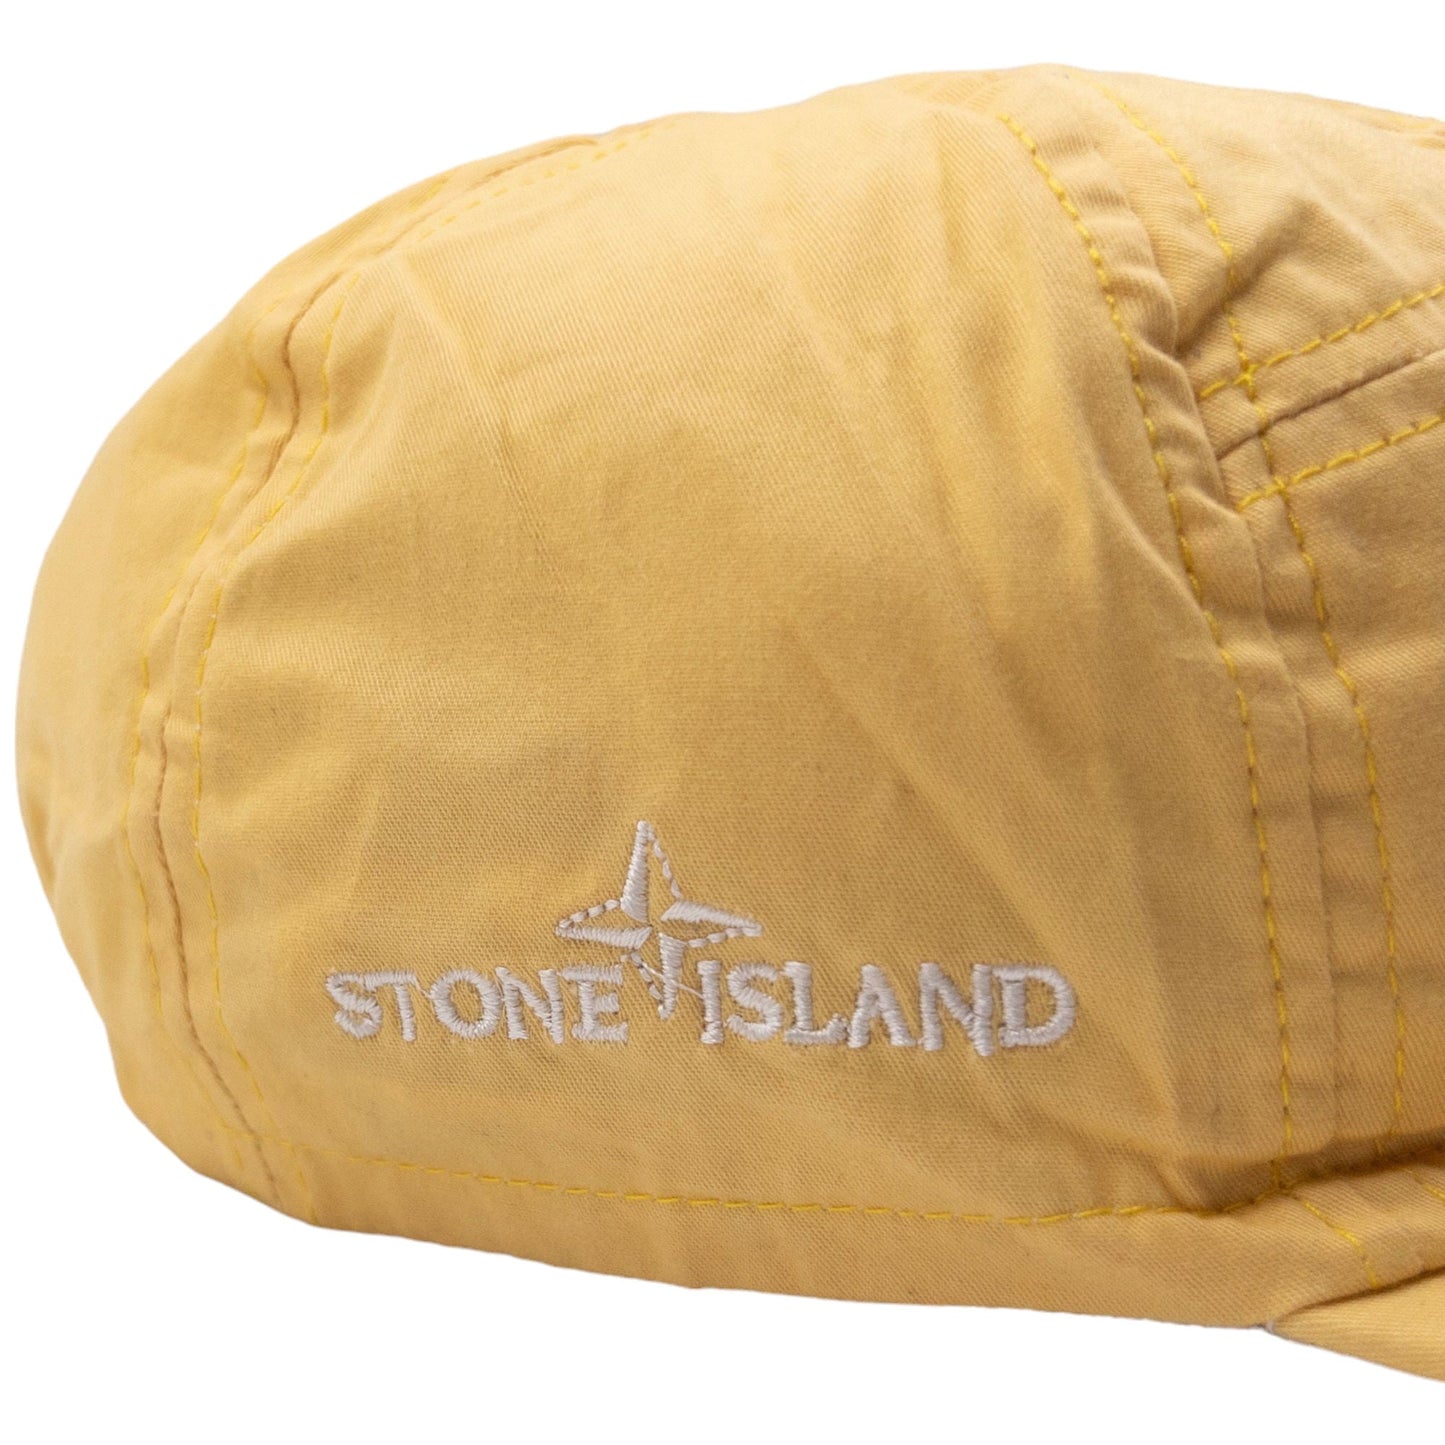 Vintage Stone Island Hat